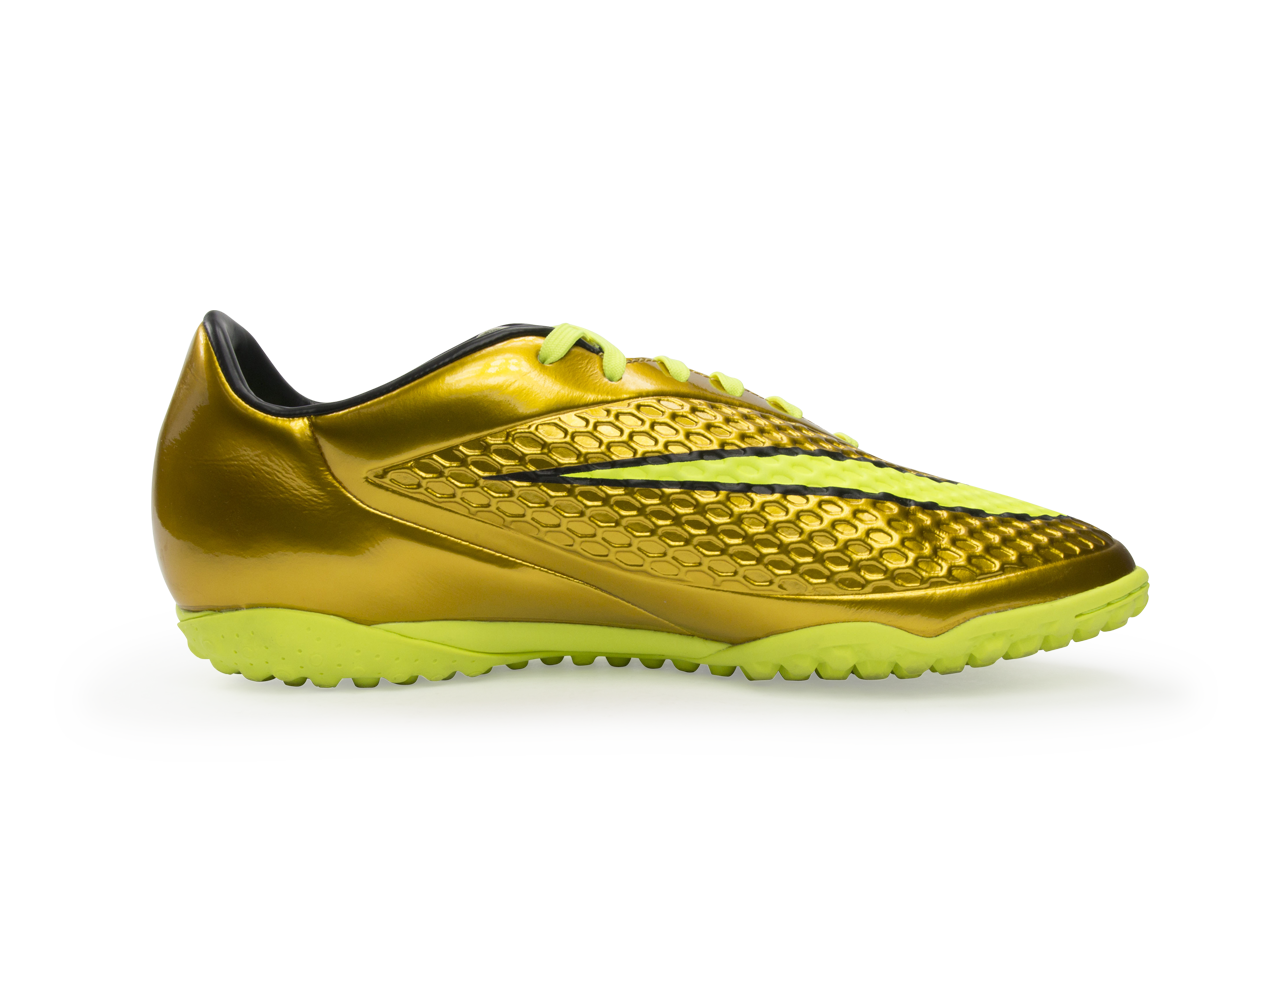 Nike Men's Hypervenom Phelon Turf Soccer Shoes Metallic Gold/Black/Tour Yellow